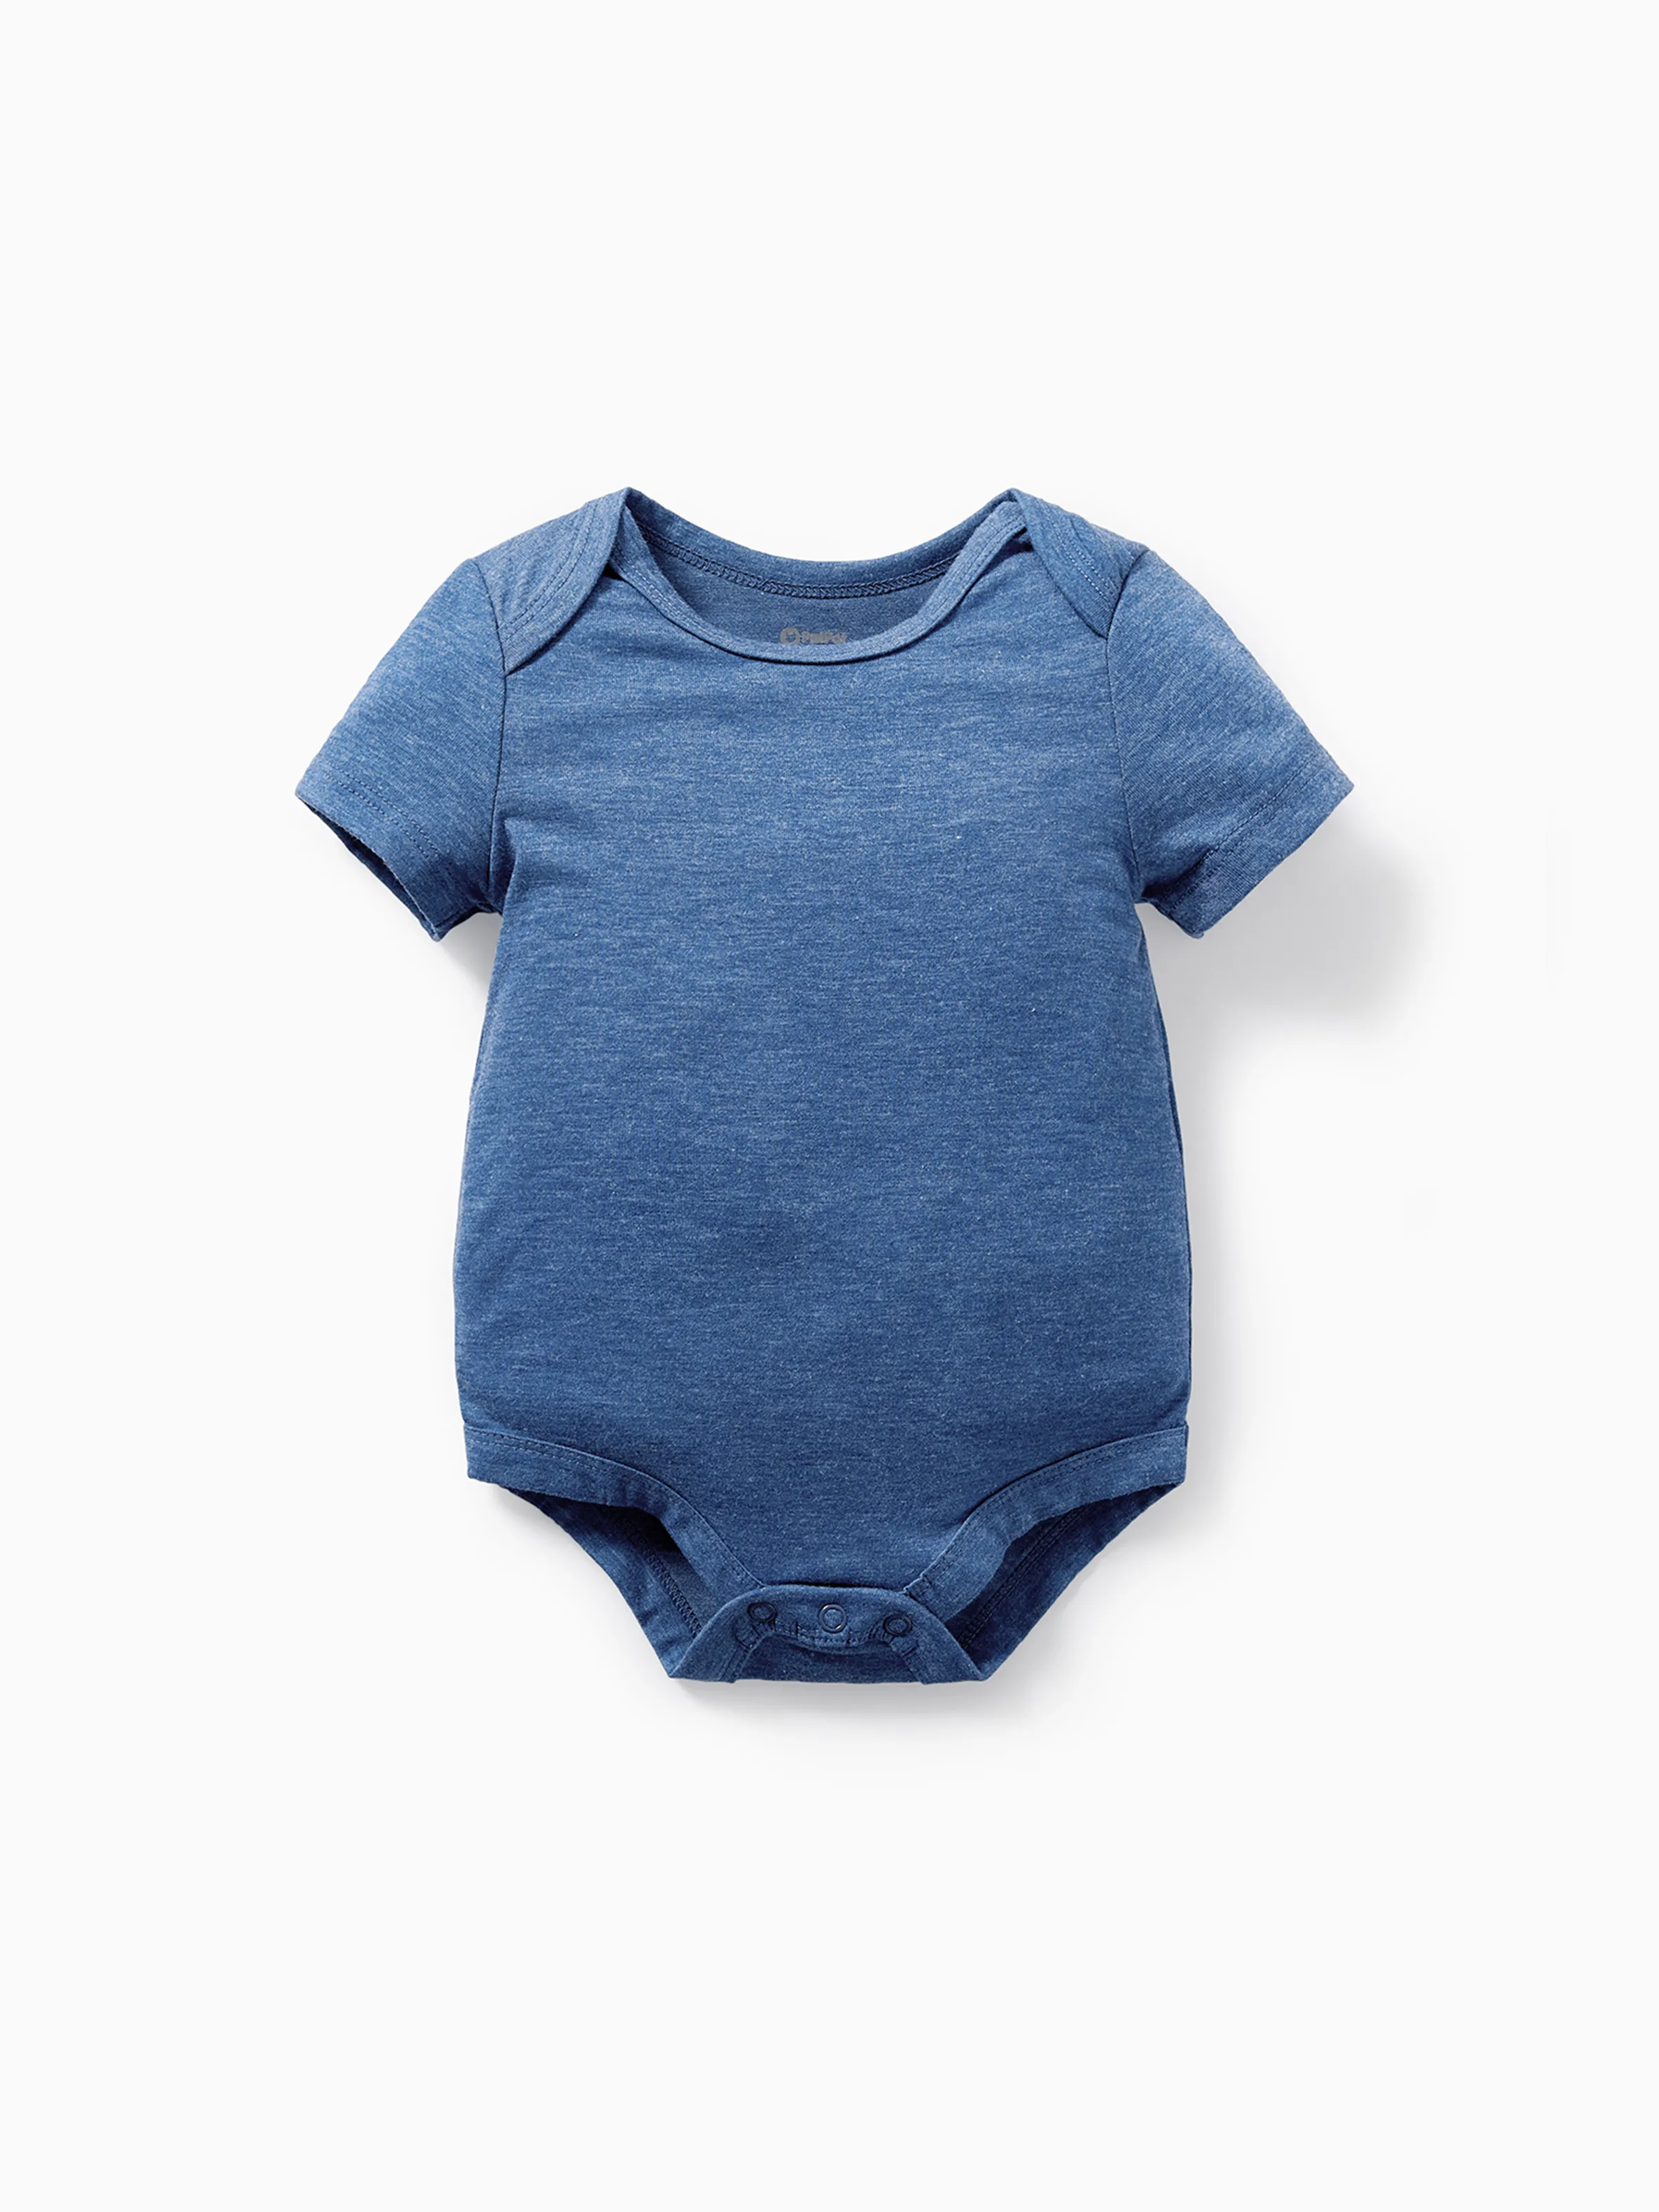 

Naia Baby Boy Dinosaur/Letter Print/Blue Short-sleeve Rompers